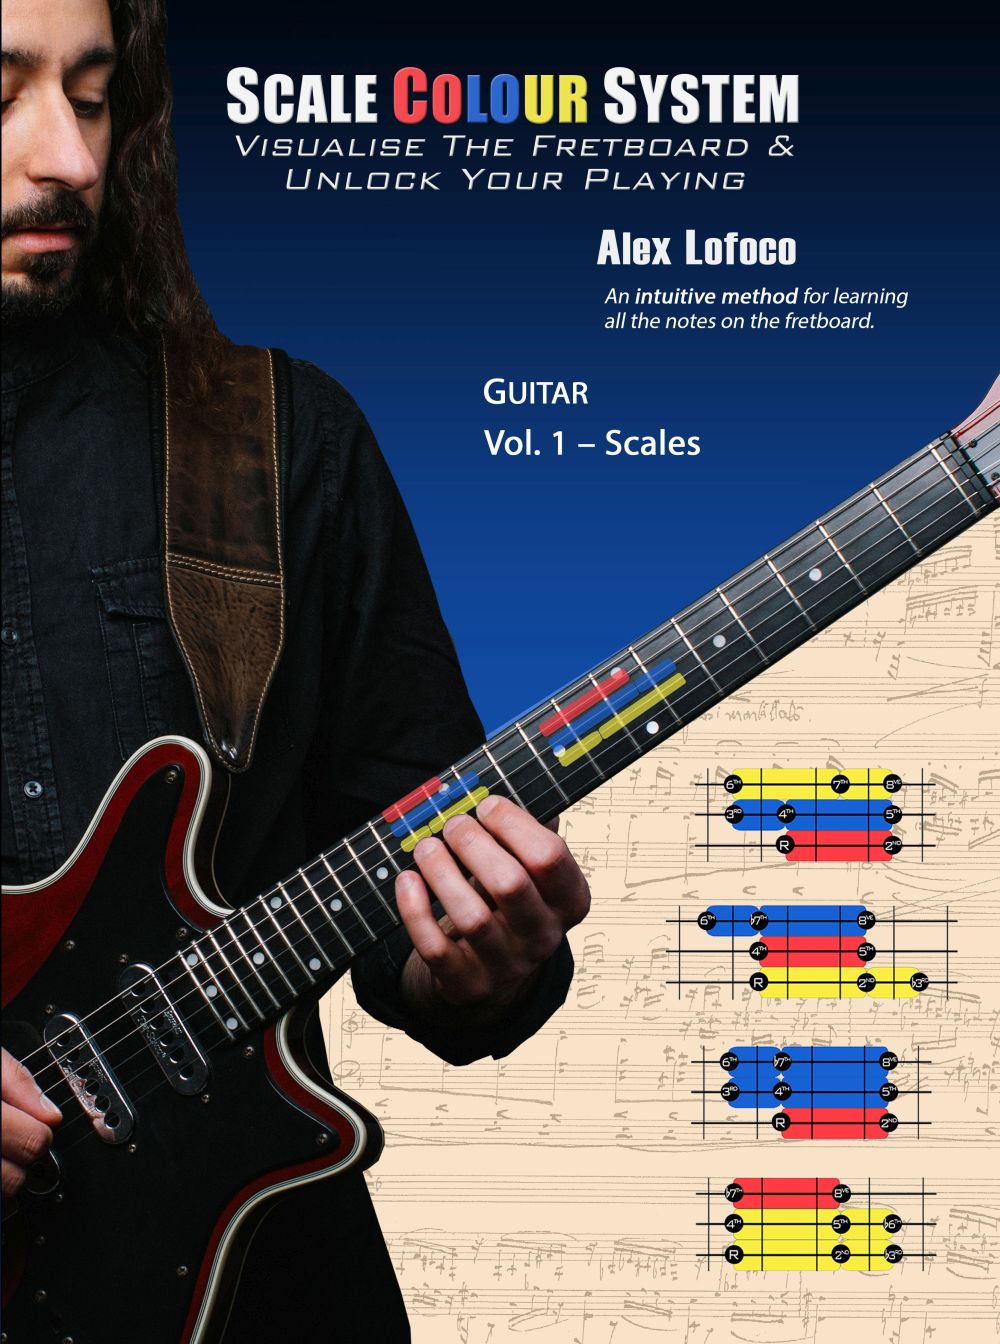 Scale Colour System Guitar Volume 1 (LOFOCO ALEX)